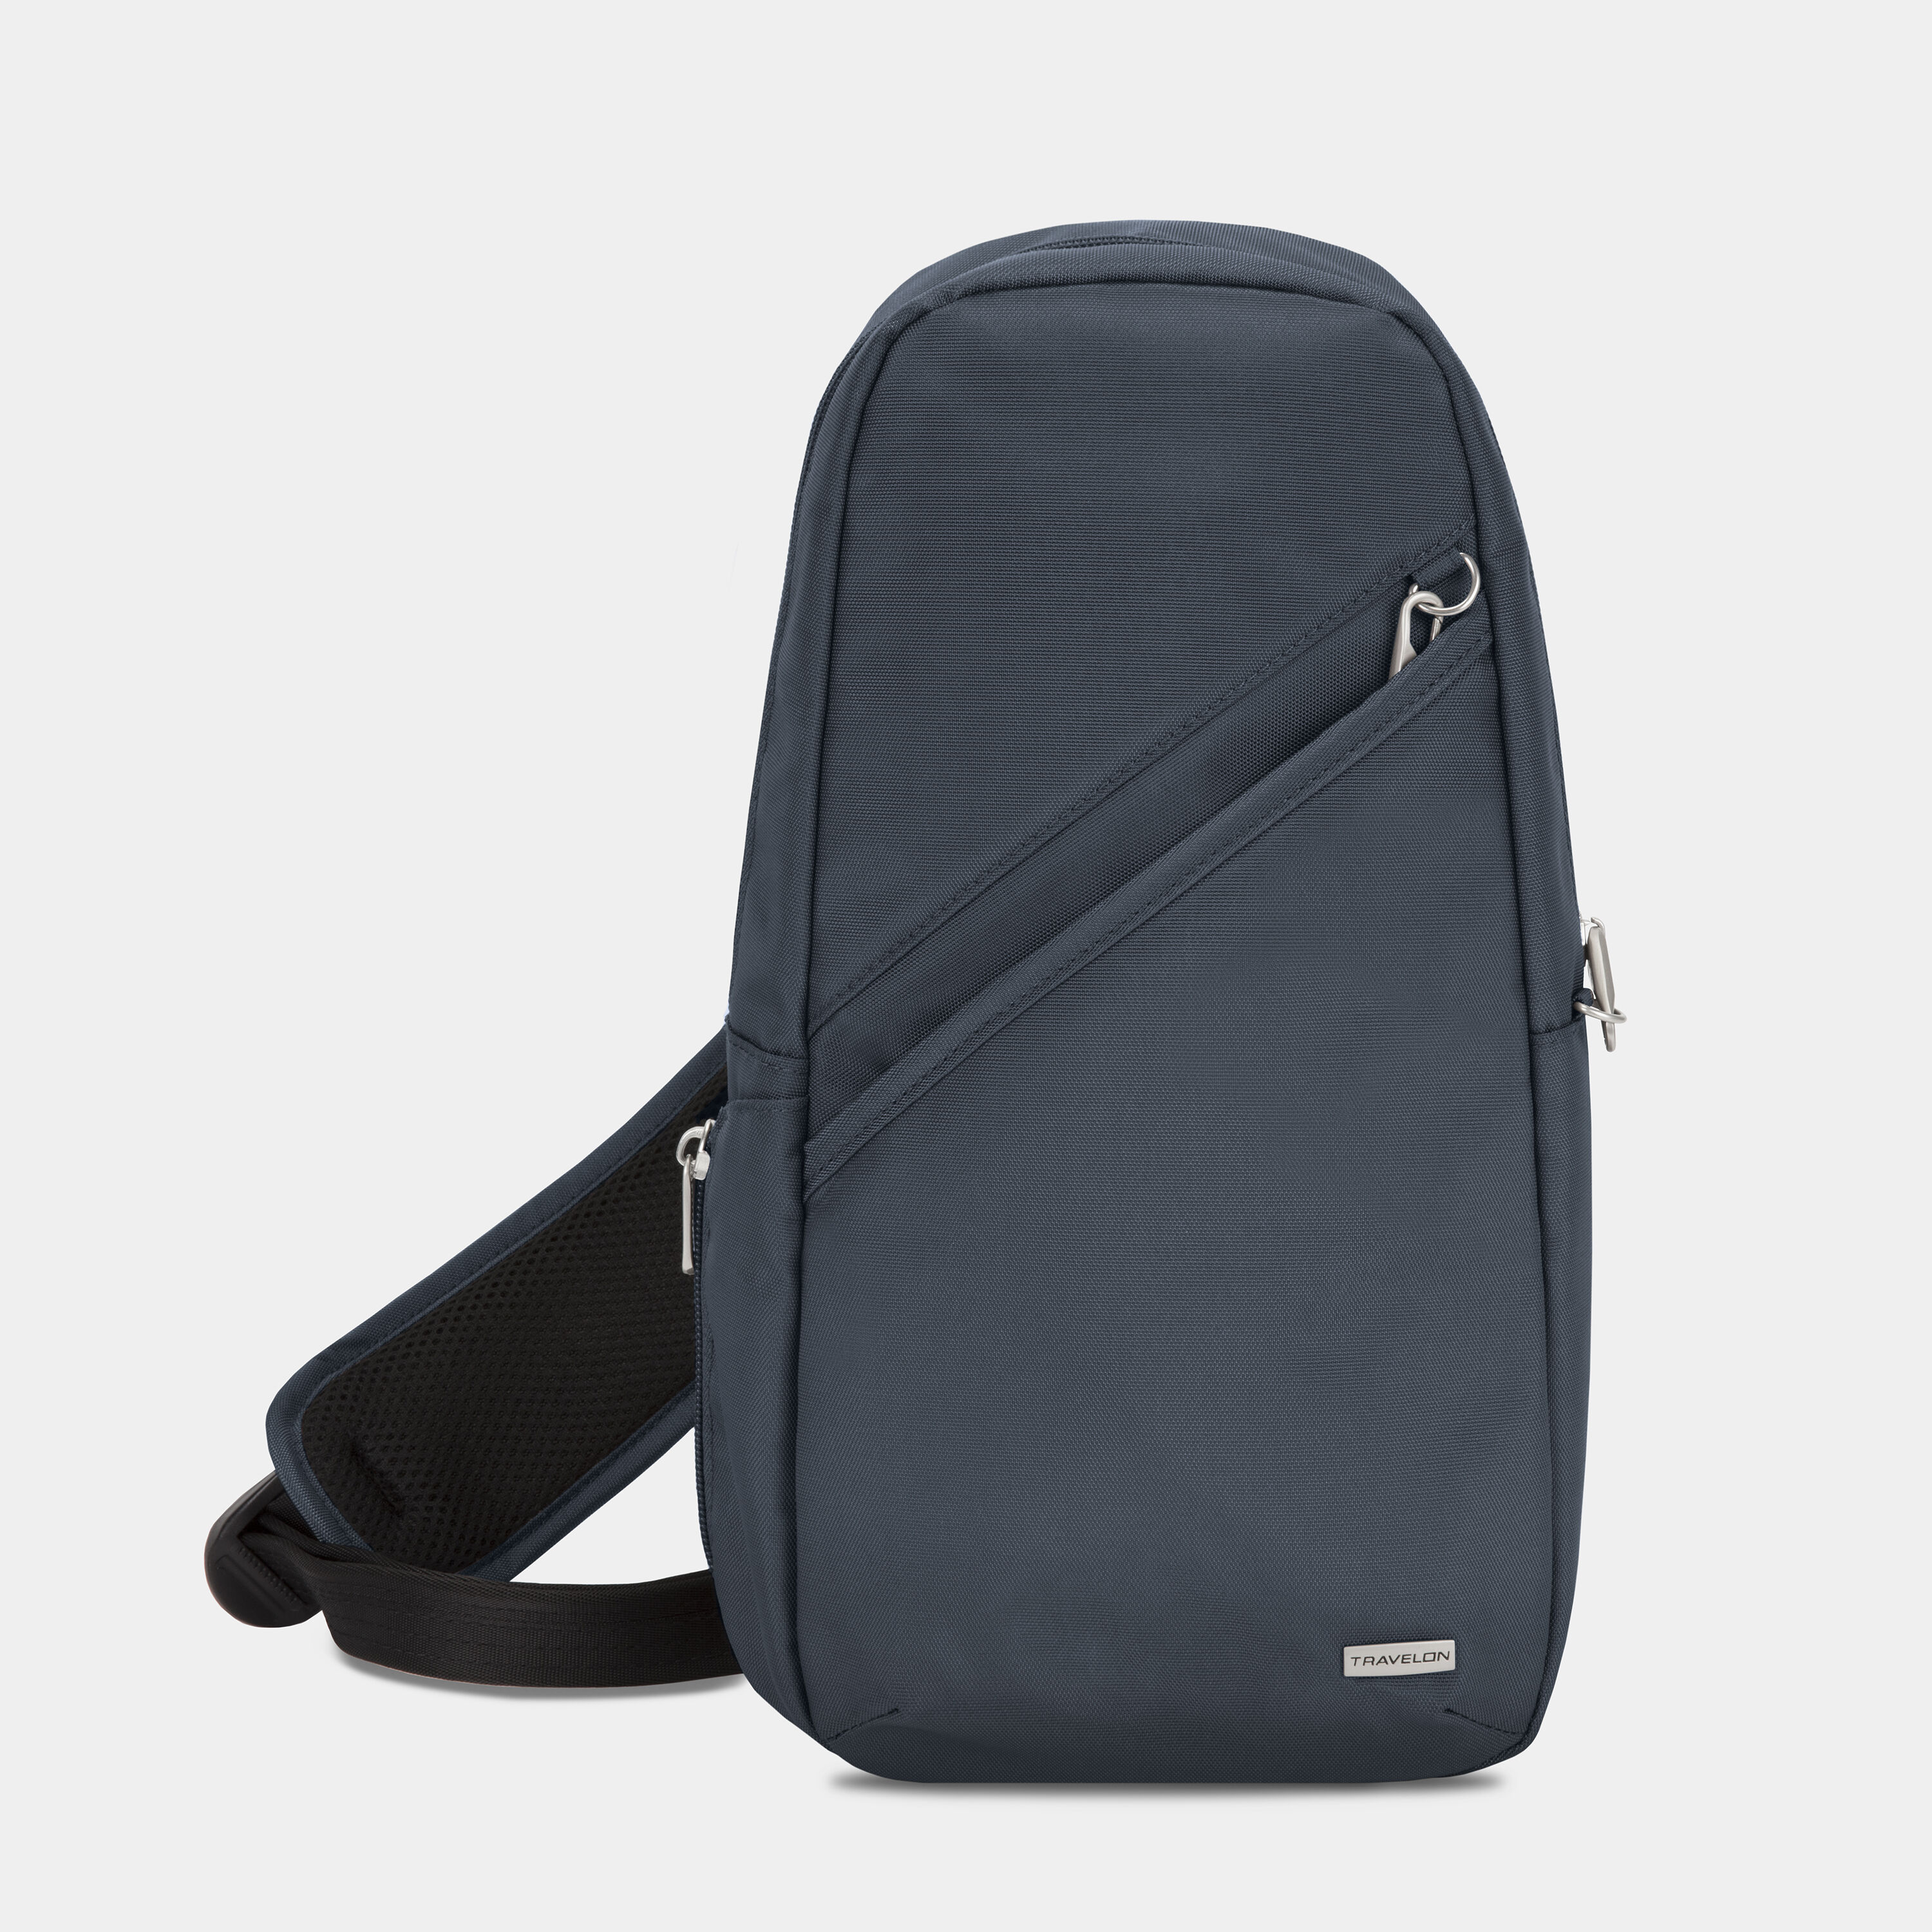 Auvella Nylon Sling Bag Cross Body Utility Travel Office Business Messenger  one Side Shoulder Bag for Men and Women Unisex : Amazon.in: Fashion